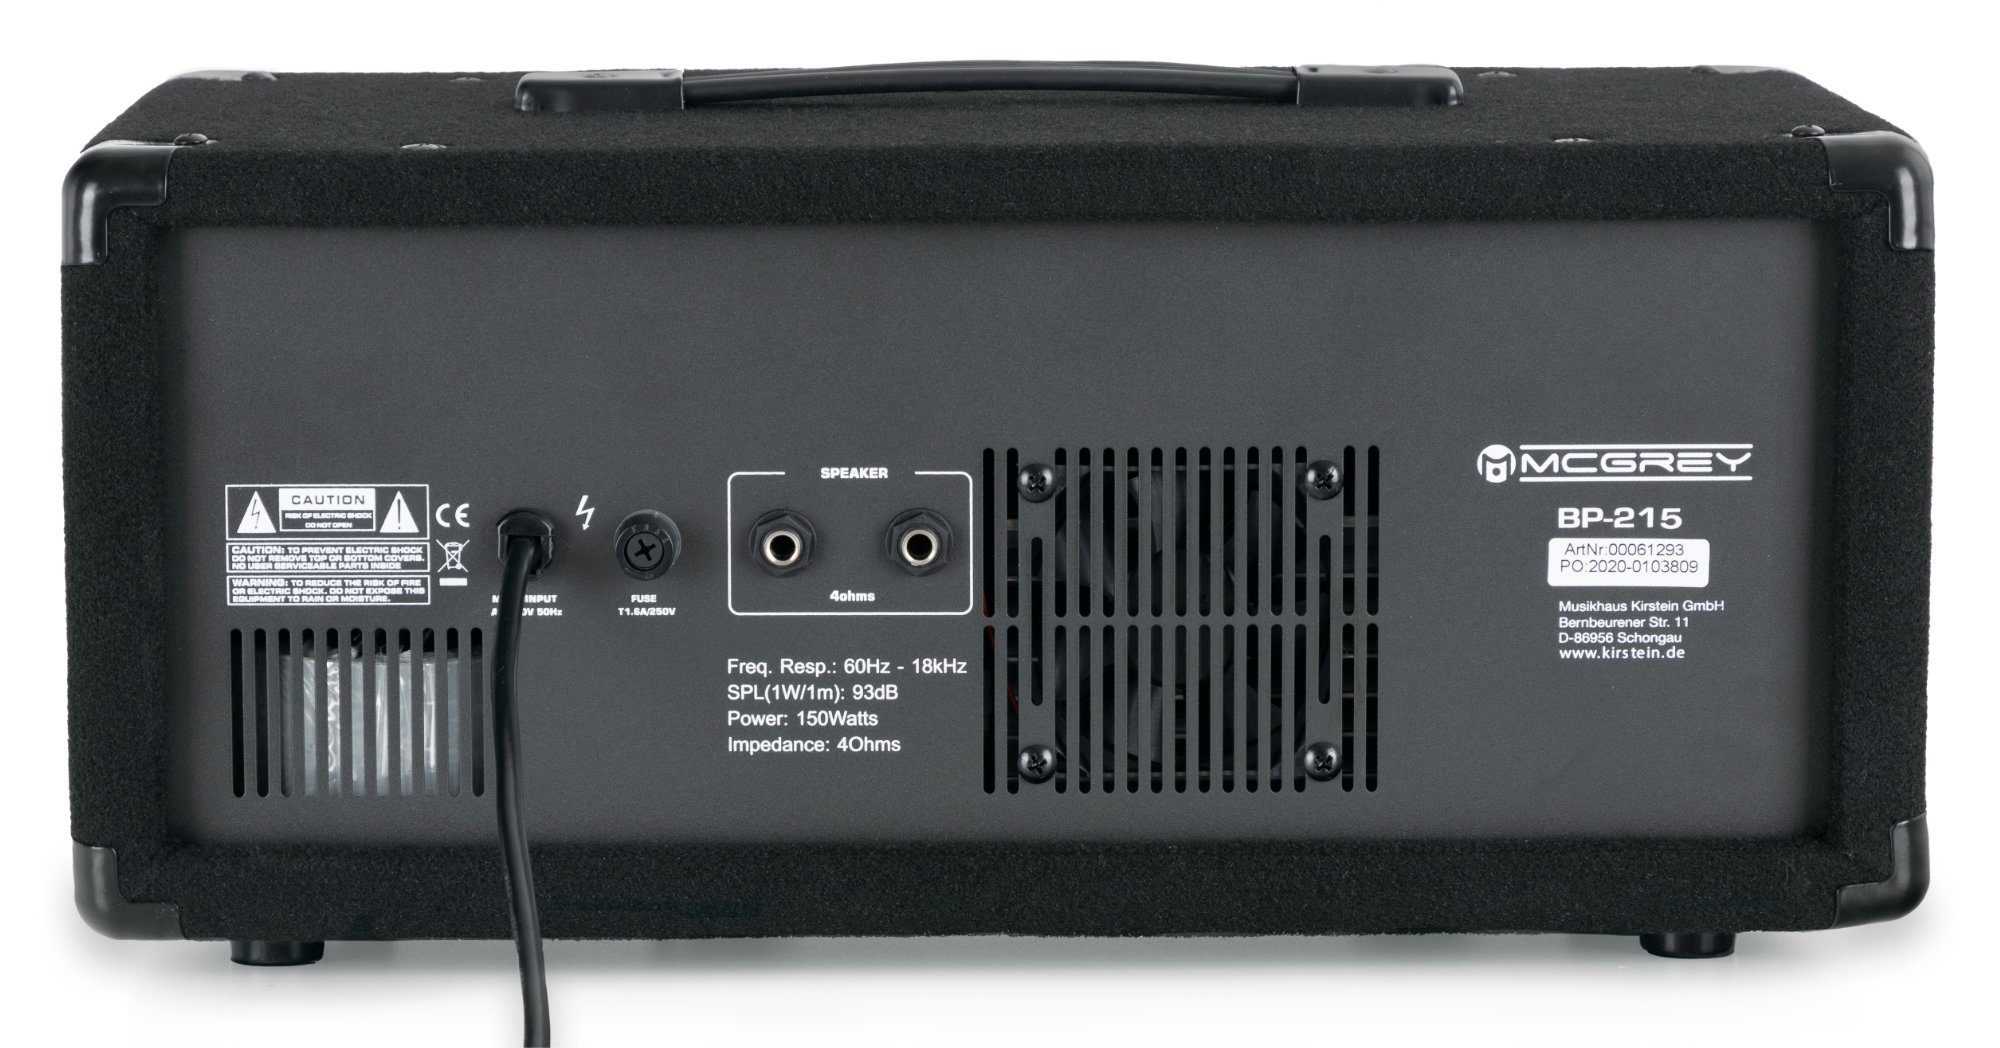 & Lautsprechersystem (Bluetooth, Stative) 150 - - Powermixer 4-Kanal BP-215 inkl. Bandpack W, McGrey USB/SD-Slot PA-Anlage Mikrofon, Kabel